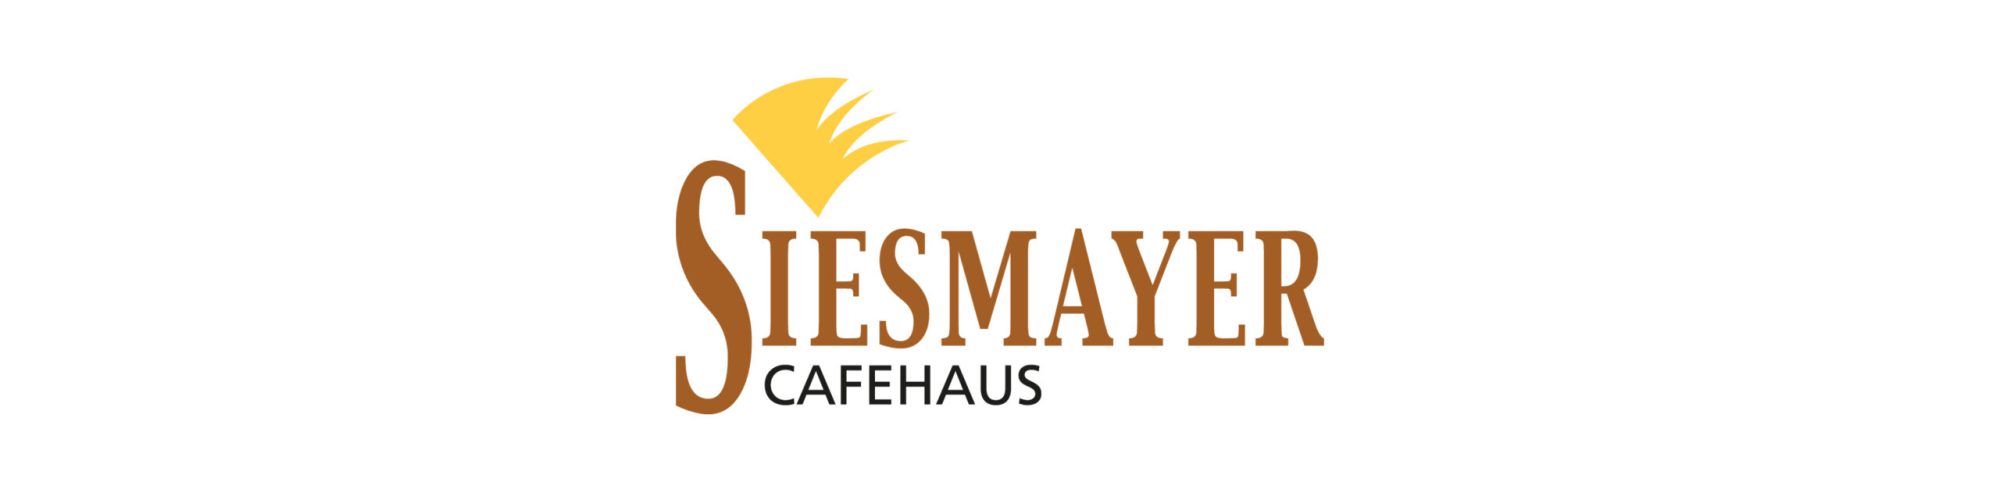 Header Event Cafehaus Siesmayer